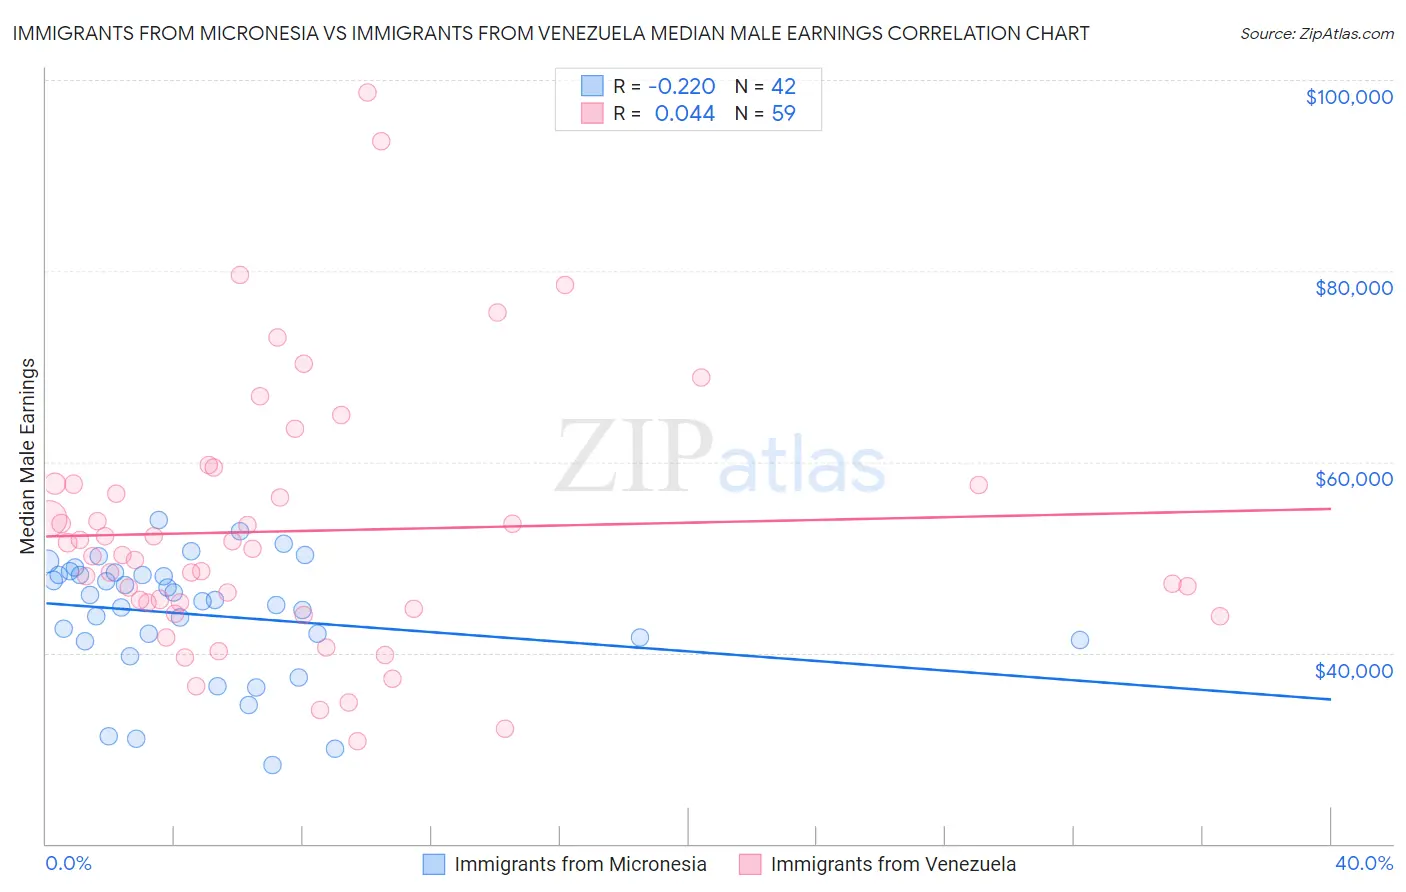 Immigrants from Micronesia vs Immigrants from Venezuela Median Male Earnings